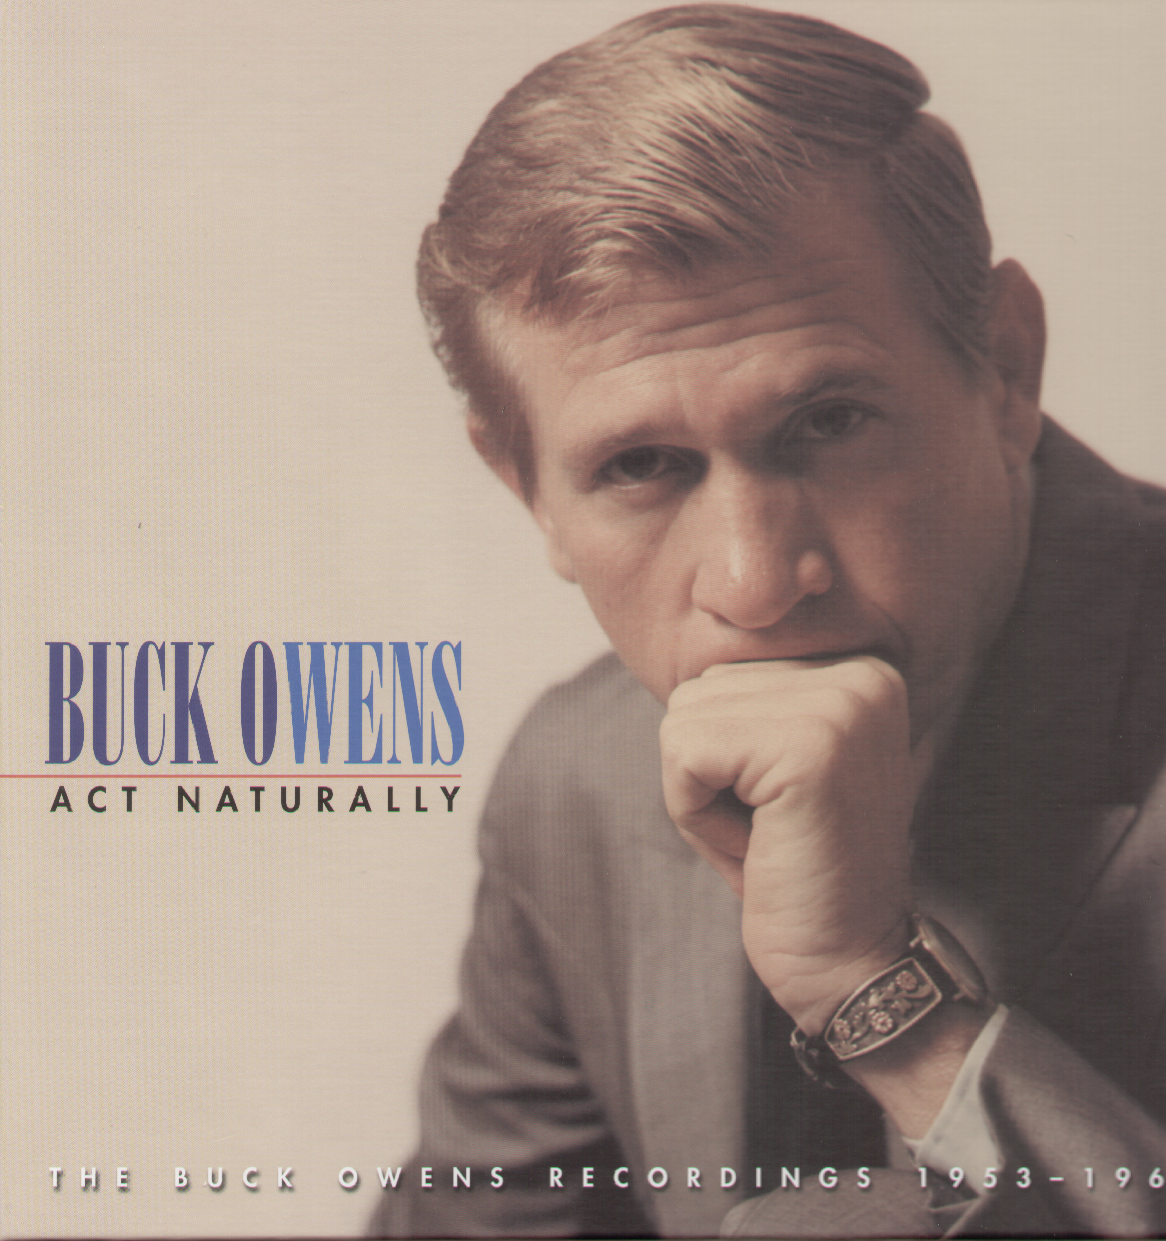 ACT NATURALLY/BUCK OWENS RECORDINGS 1953-64 (BOX)